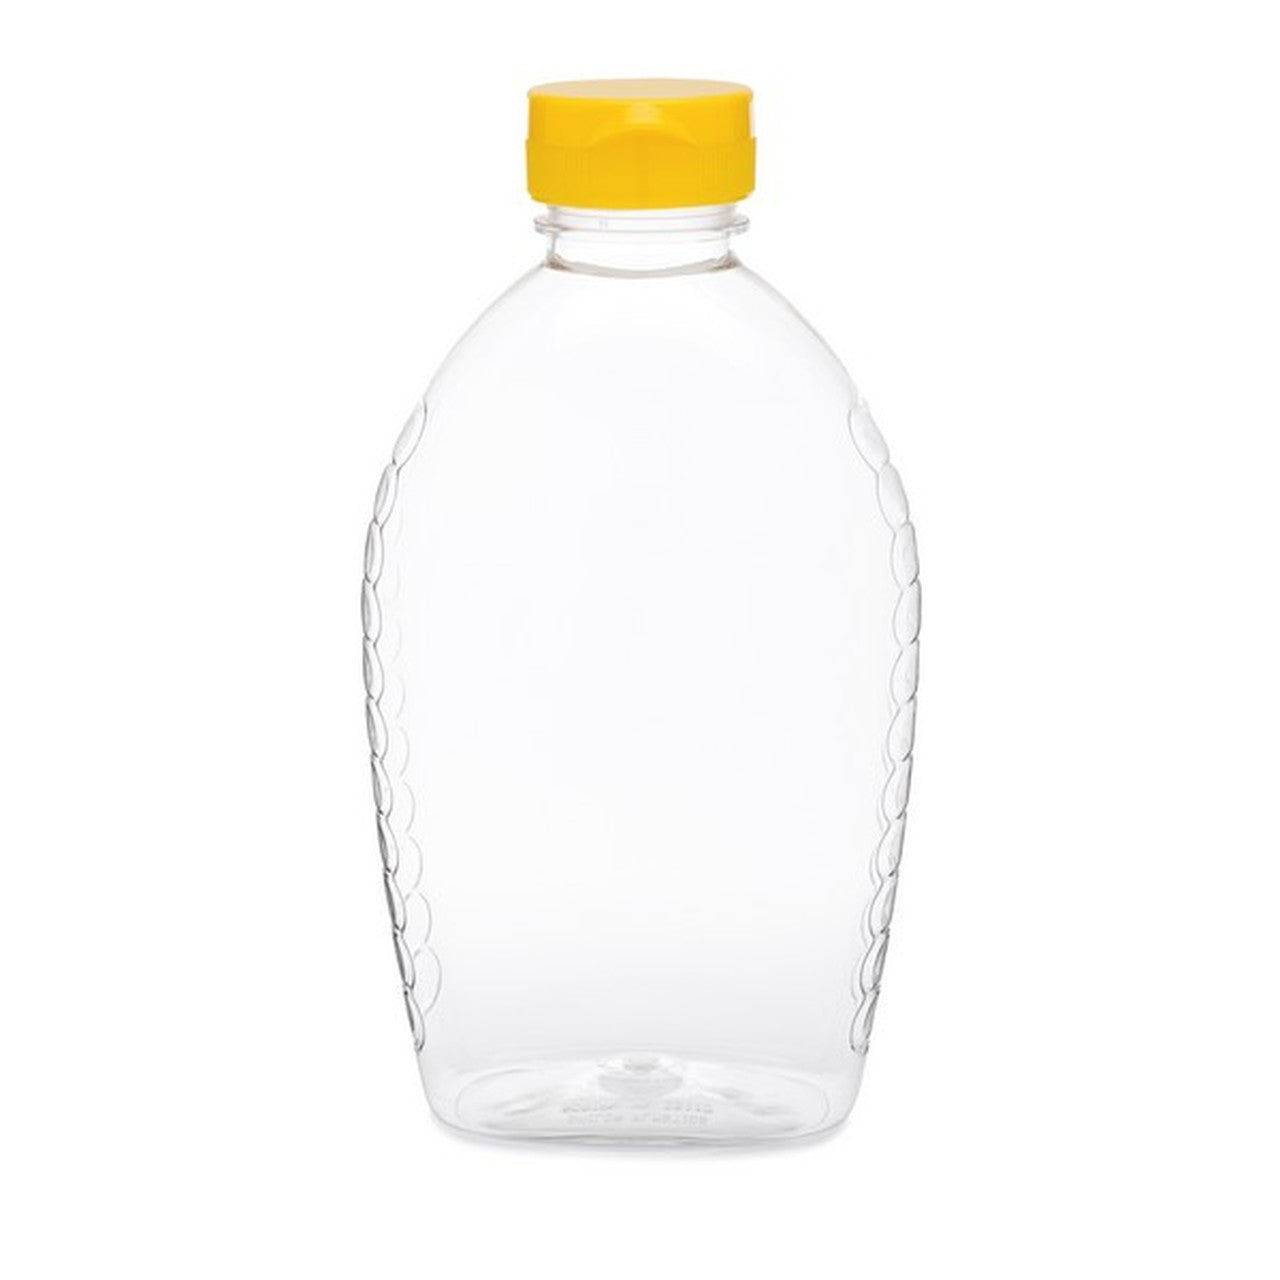 12 oz Plastic Honey Bottles - Clear PET Plastic Bee Hive Honey Bottles (Flip Top Lids Included)